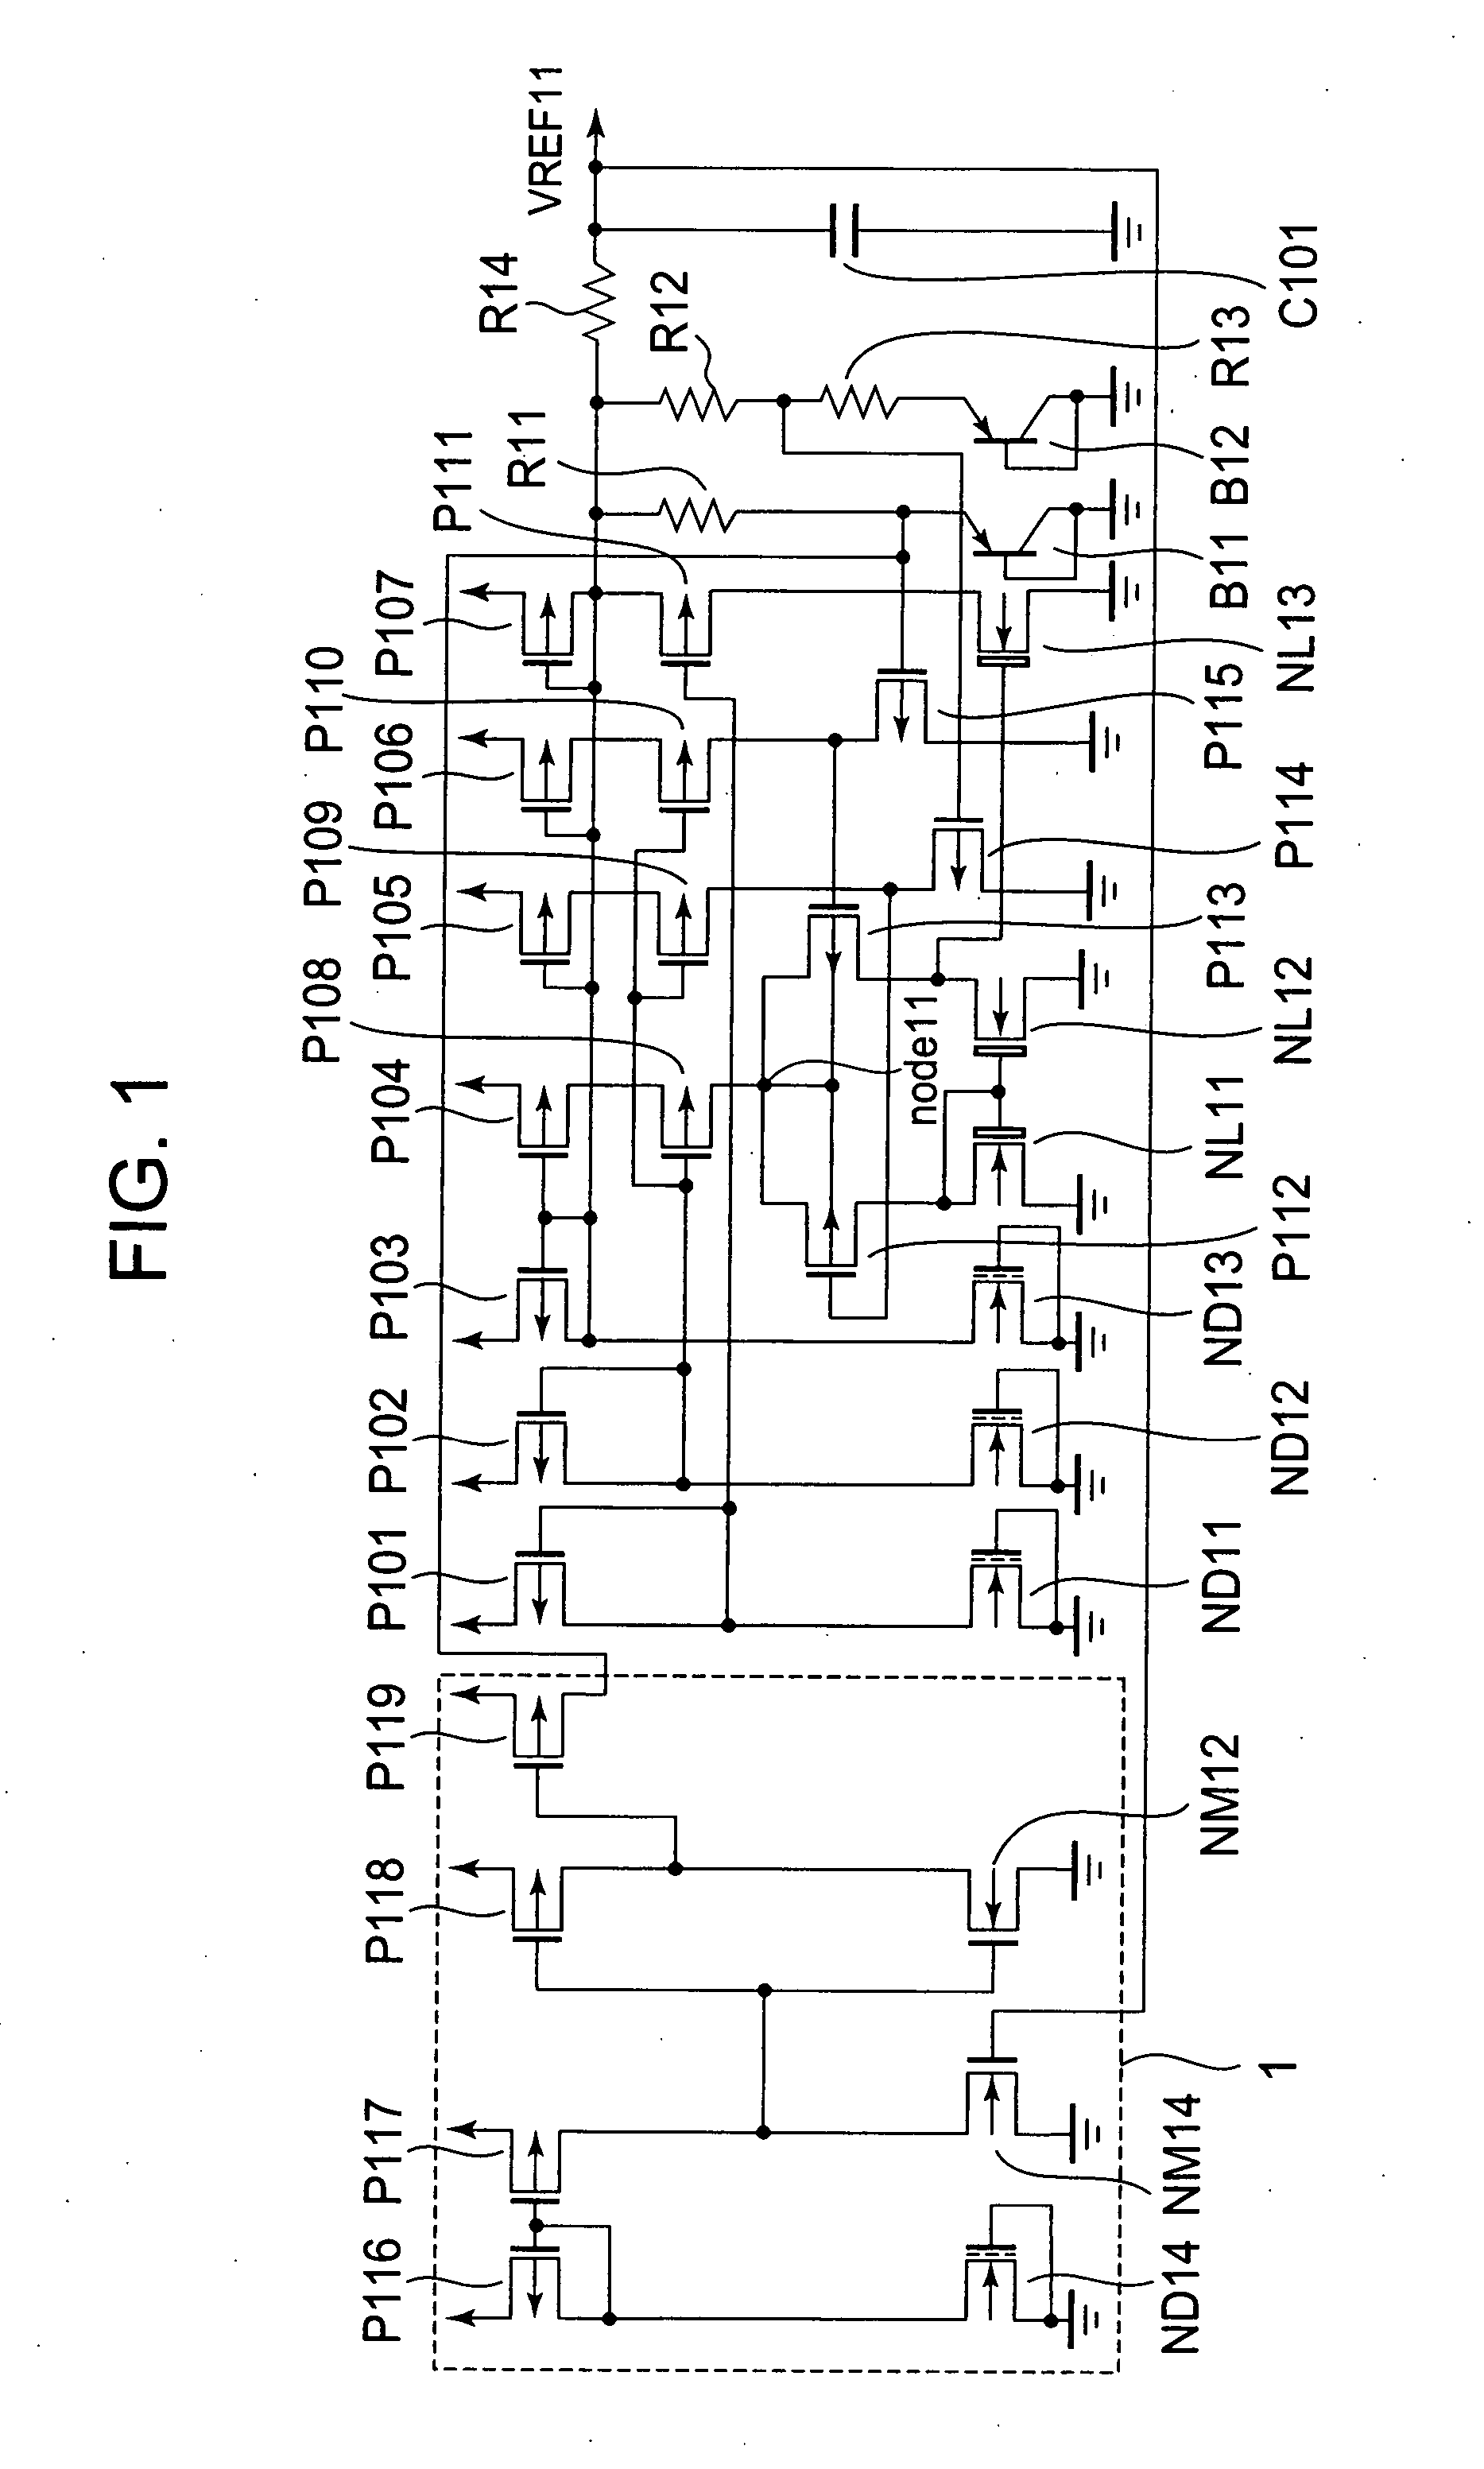 Band gap constant-voltage circuit